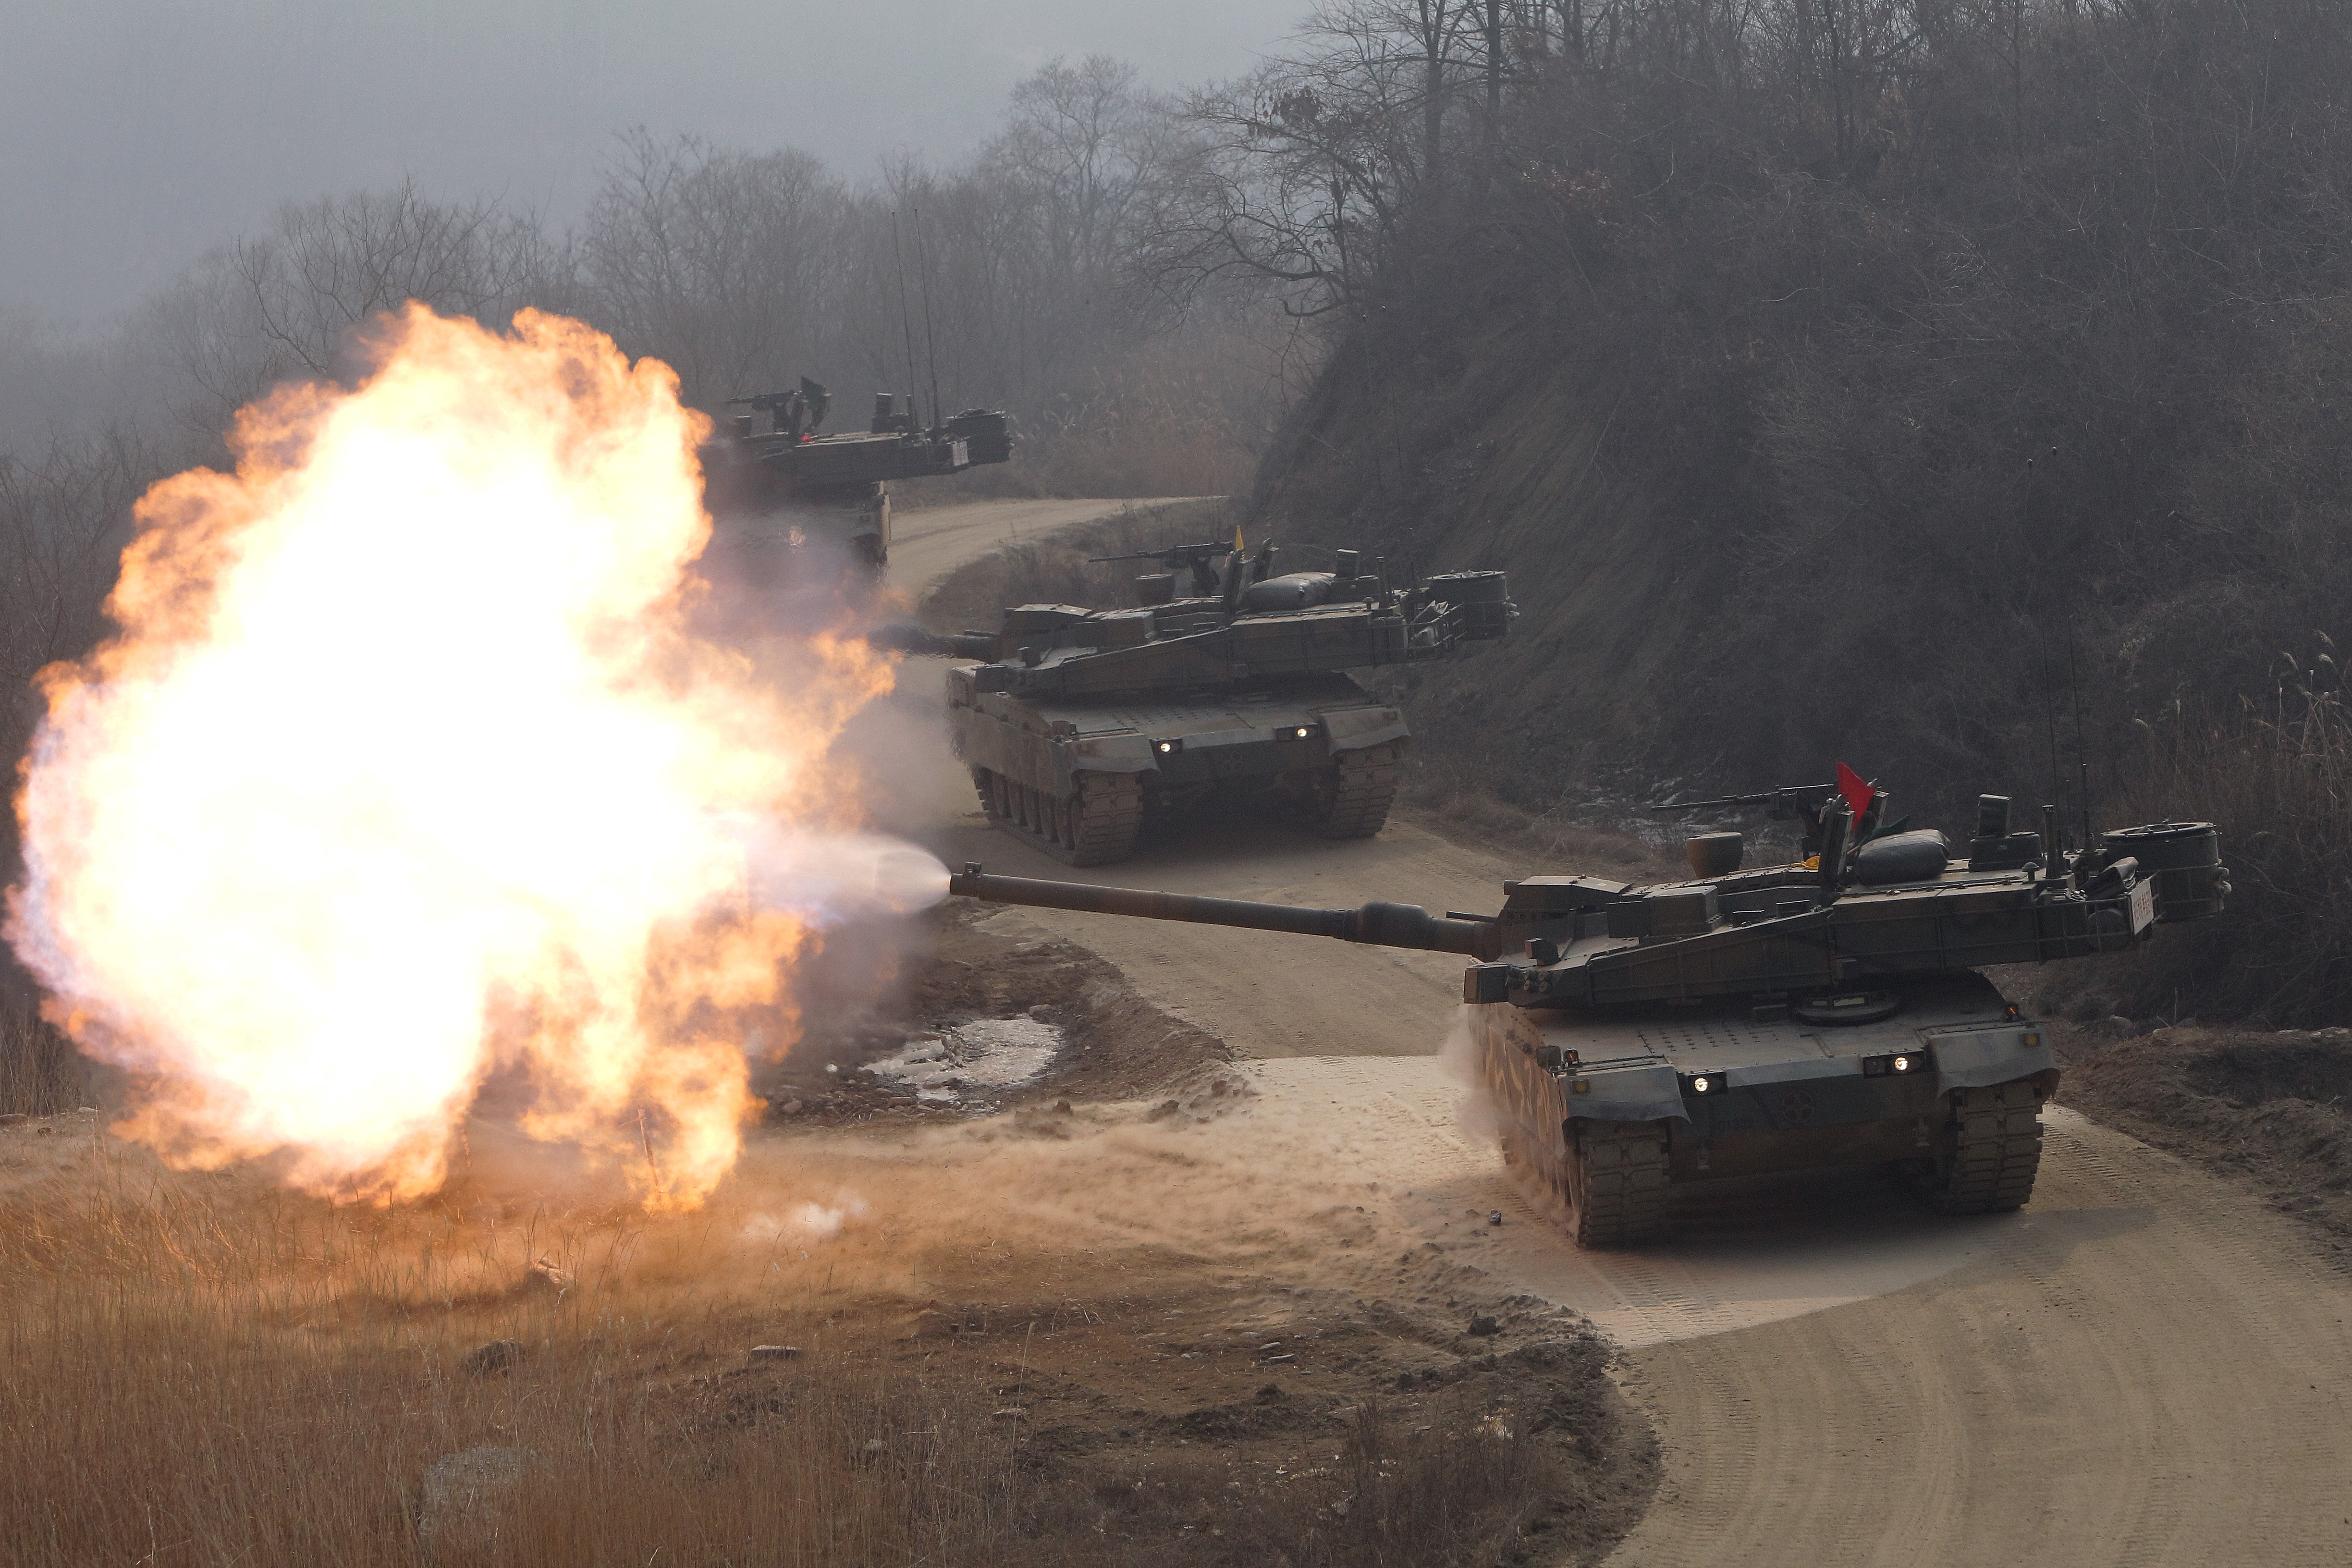 S. Korea approves plan to mass-produce more K2 main battle tanks